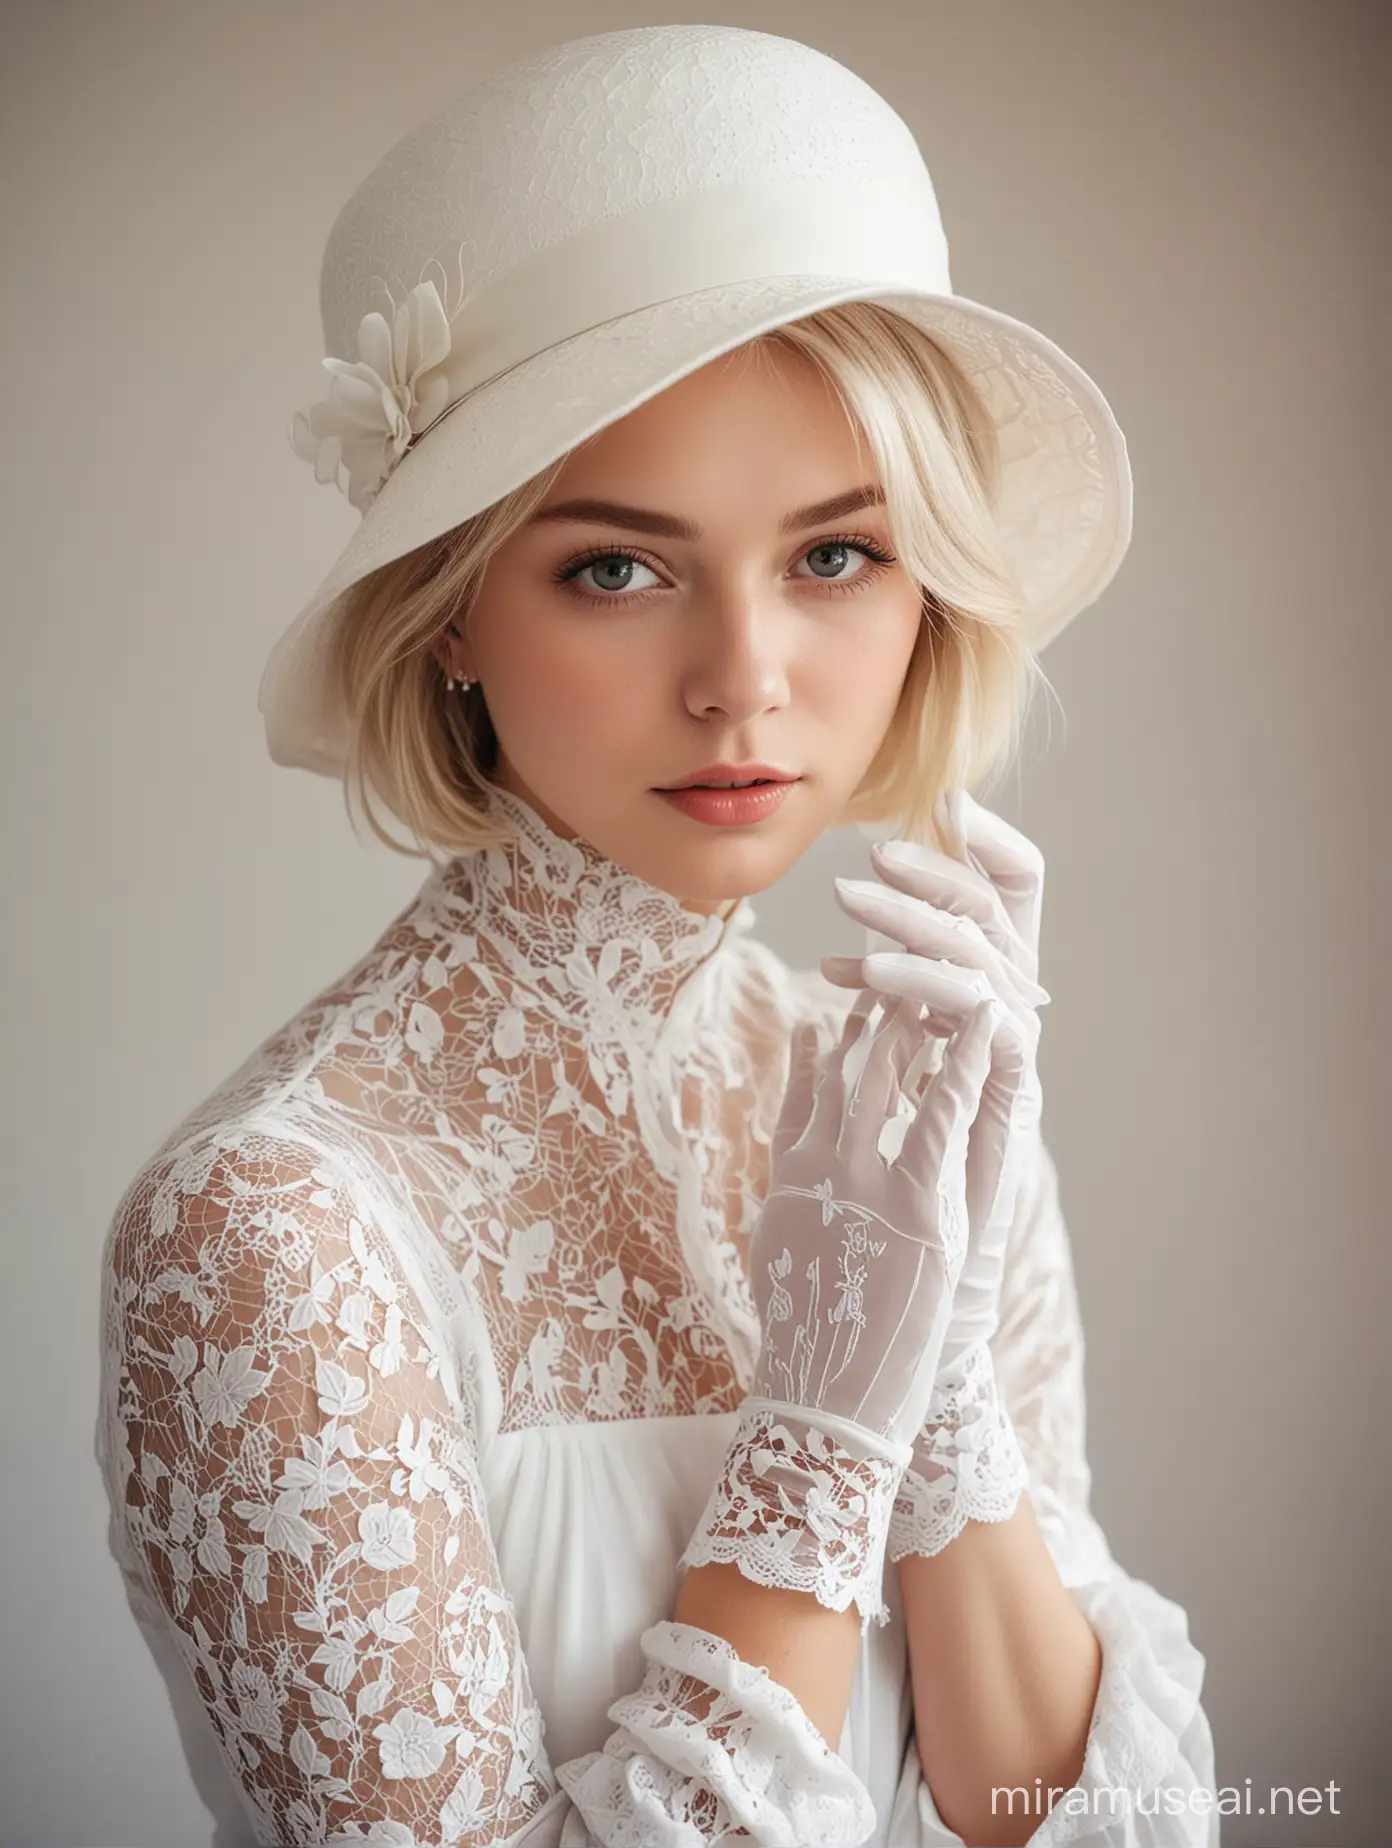 1girl,short blonde hair,white hat,white dress,white lace gloves,potrait